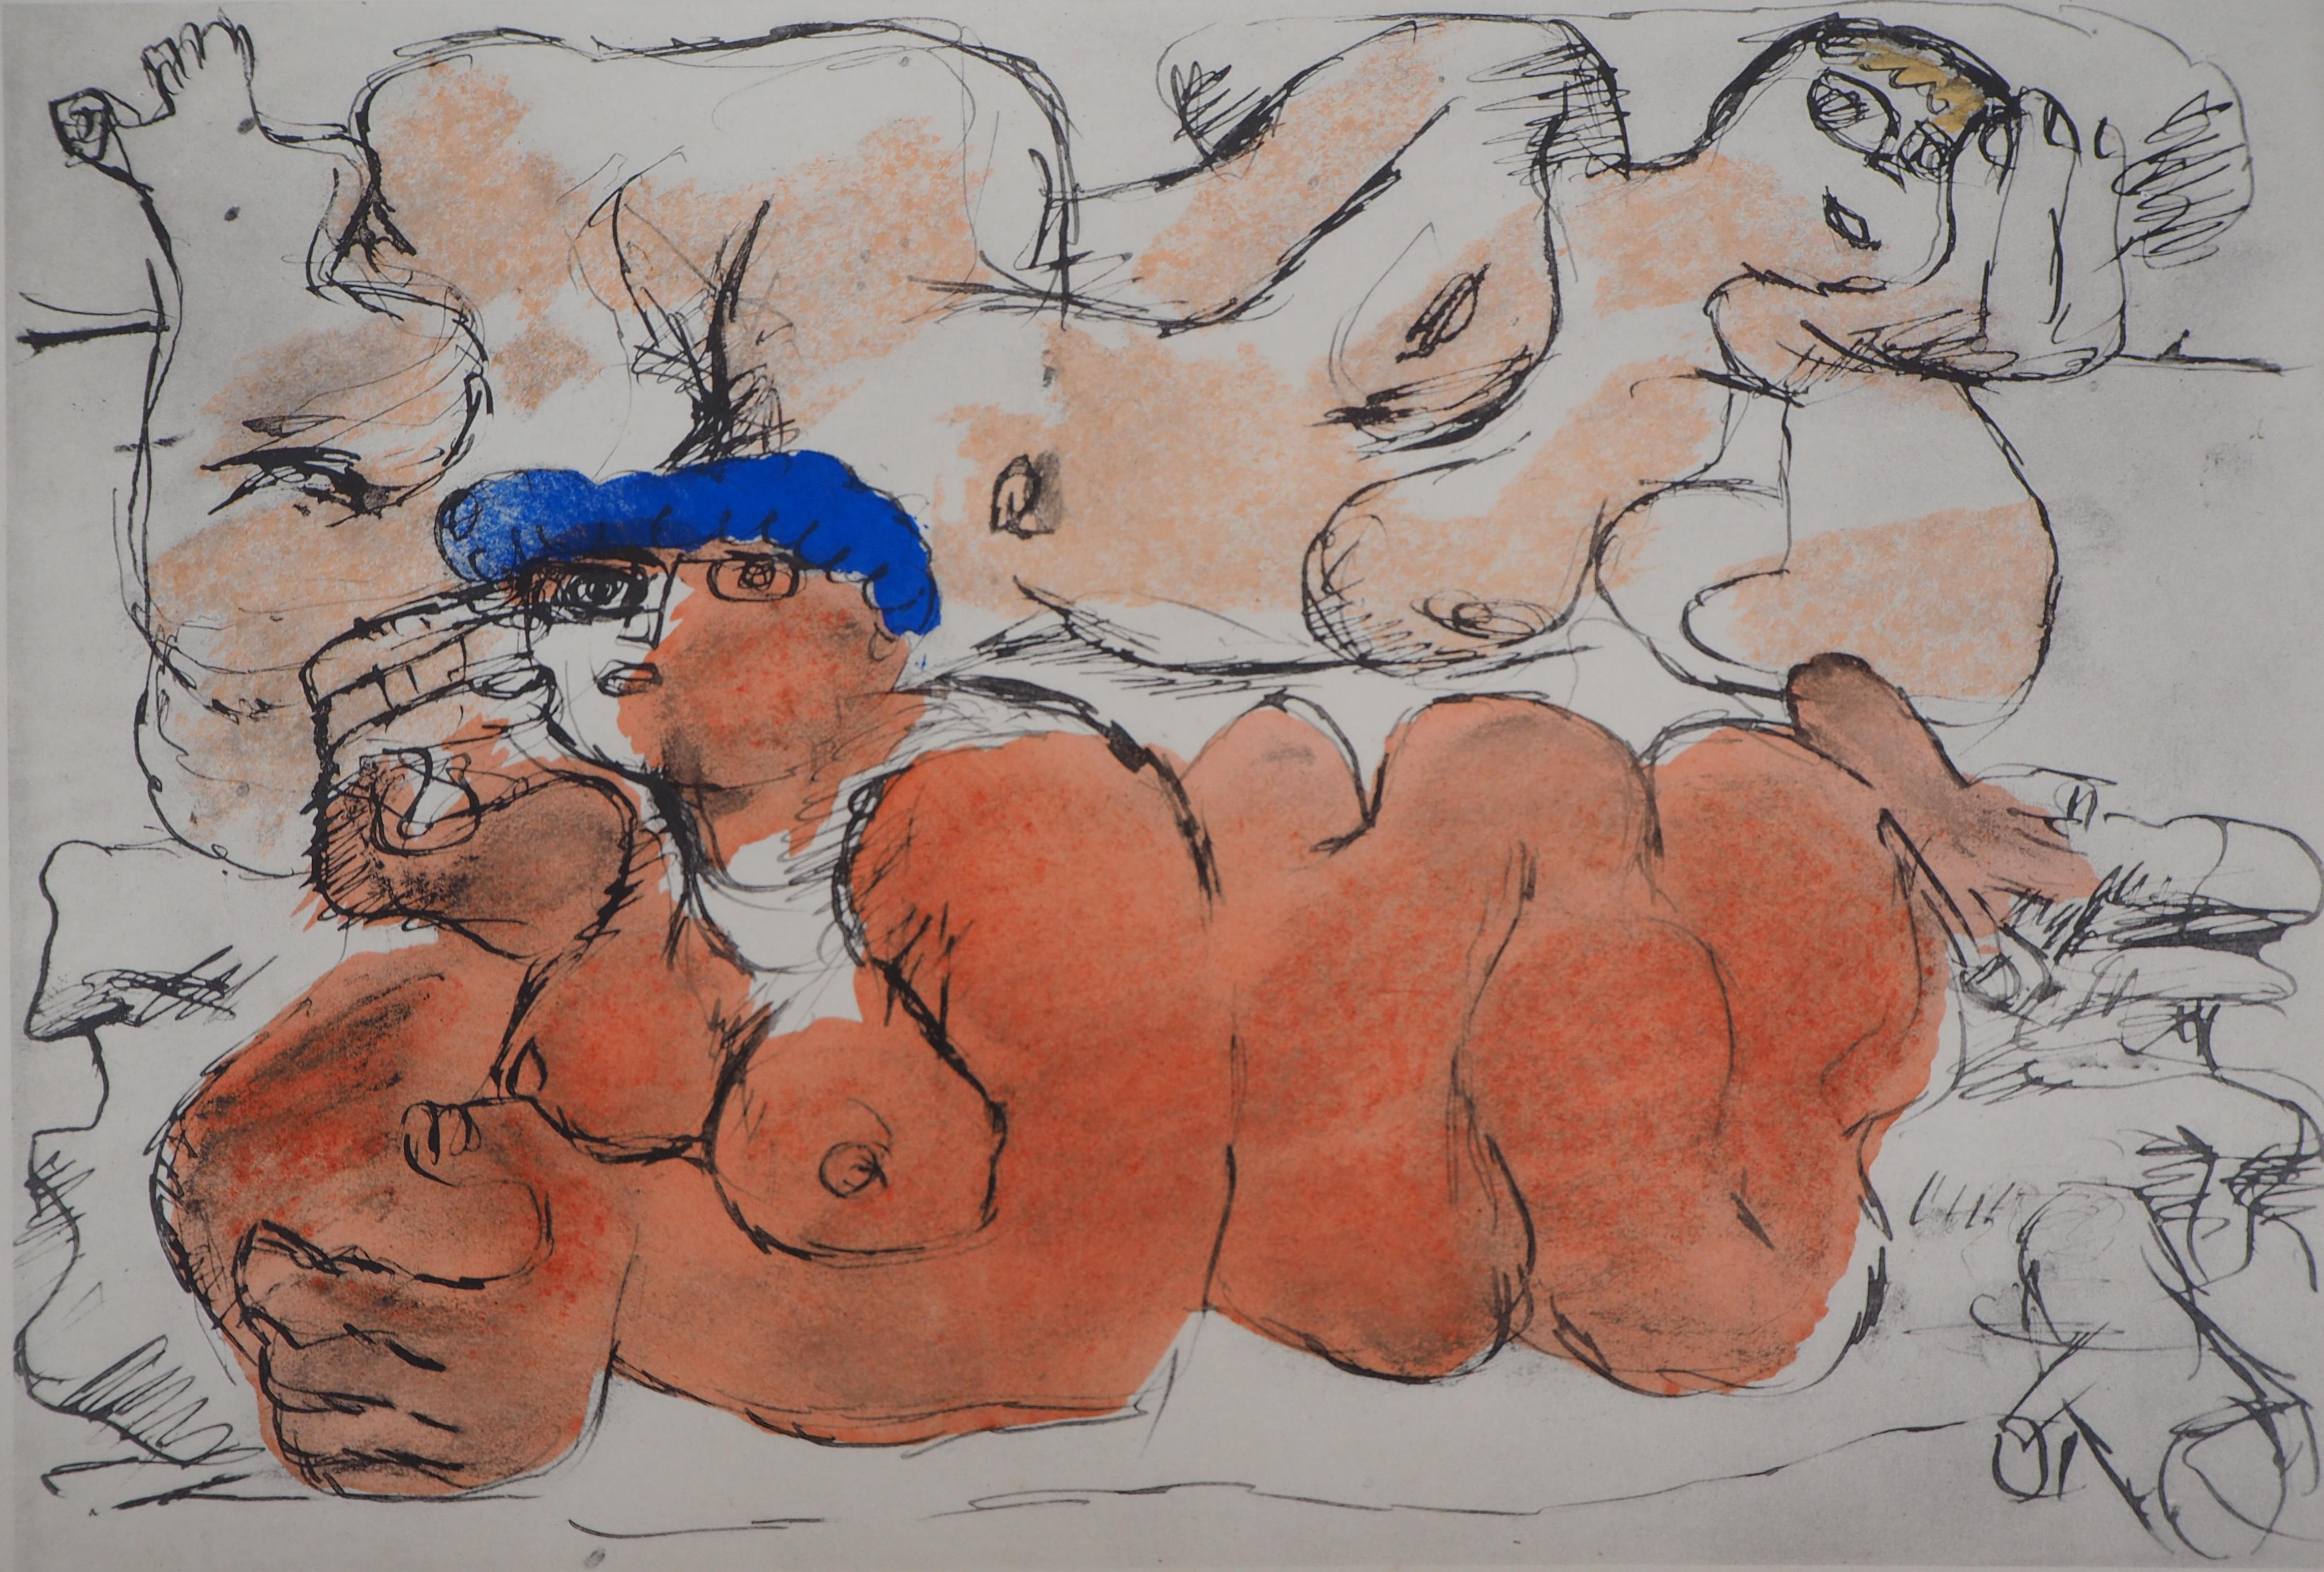 Le Corbusier Nude Print – Rest, zwei liegende Akte – Lithographie und Aquarellschablone